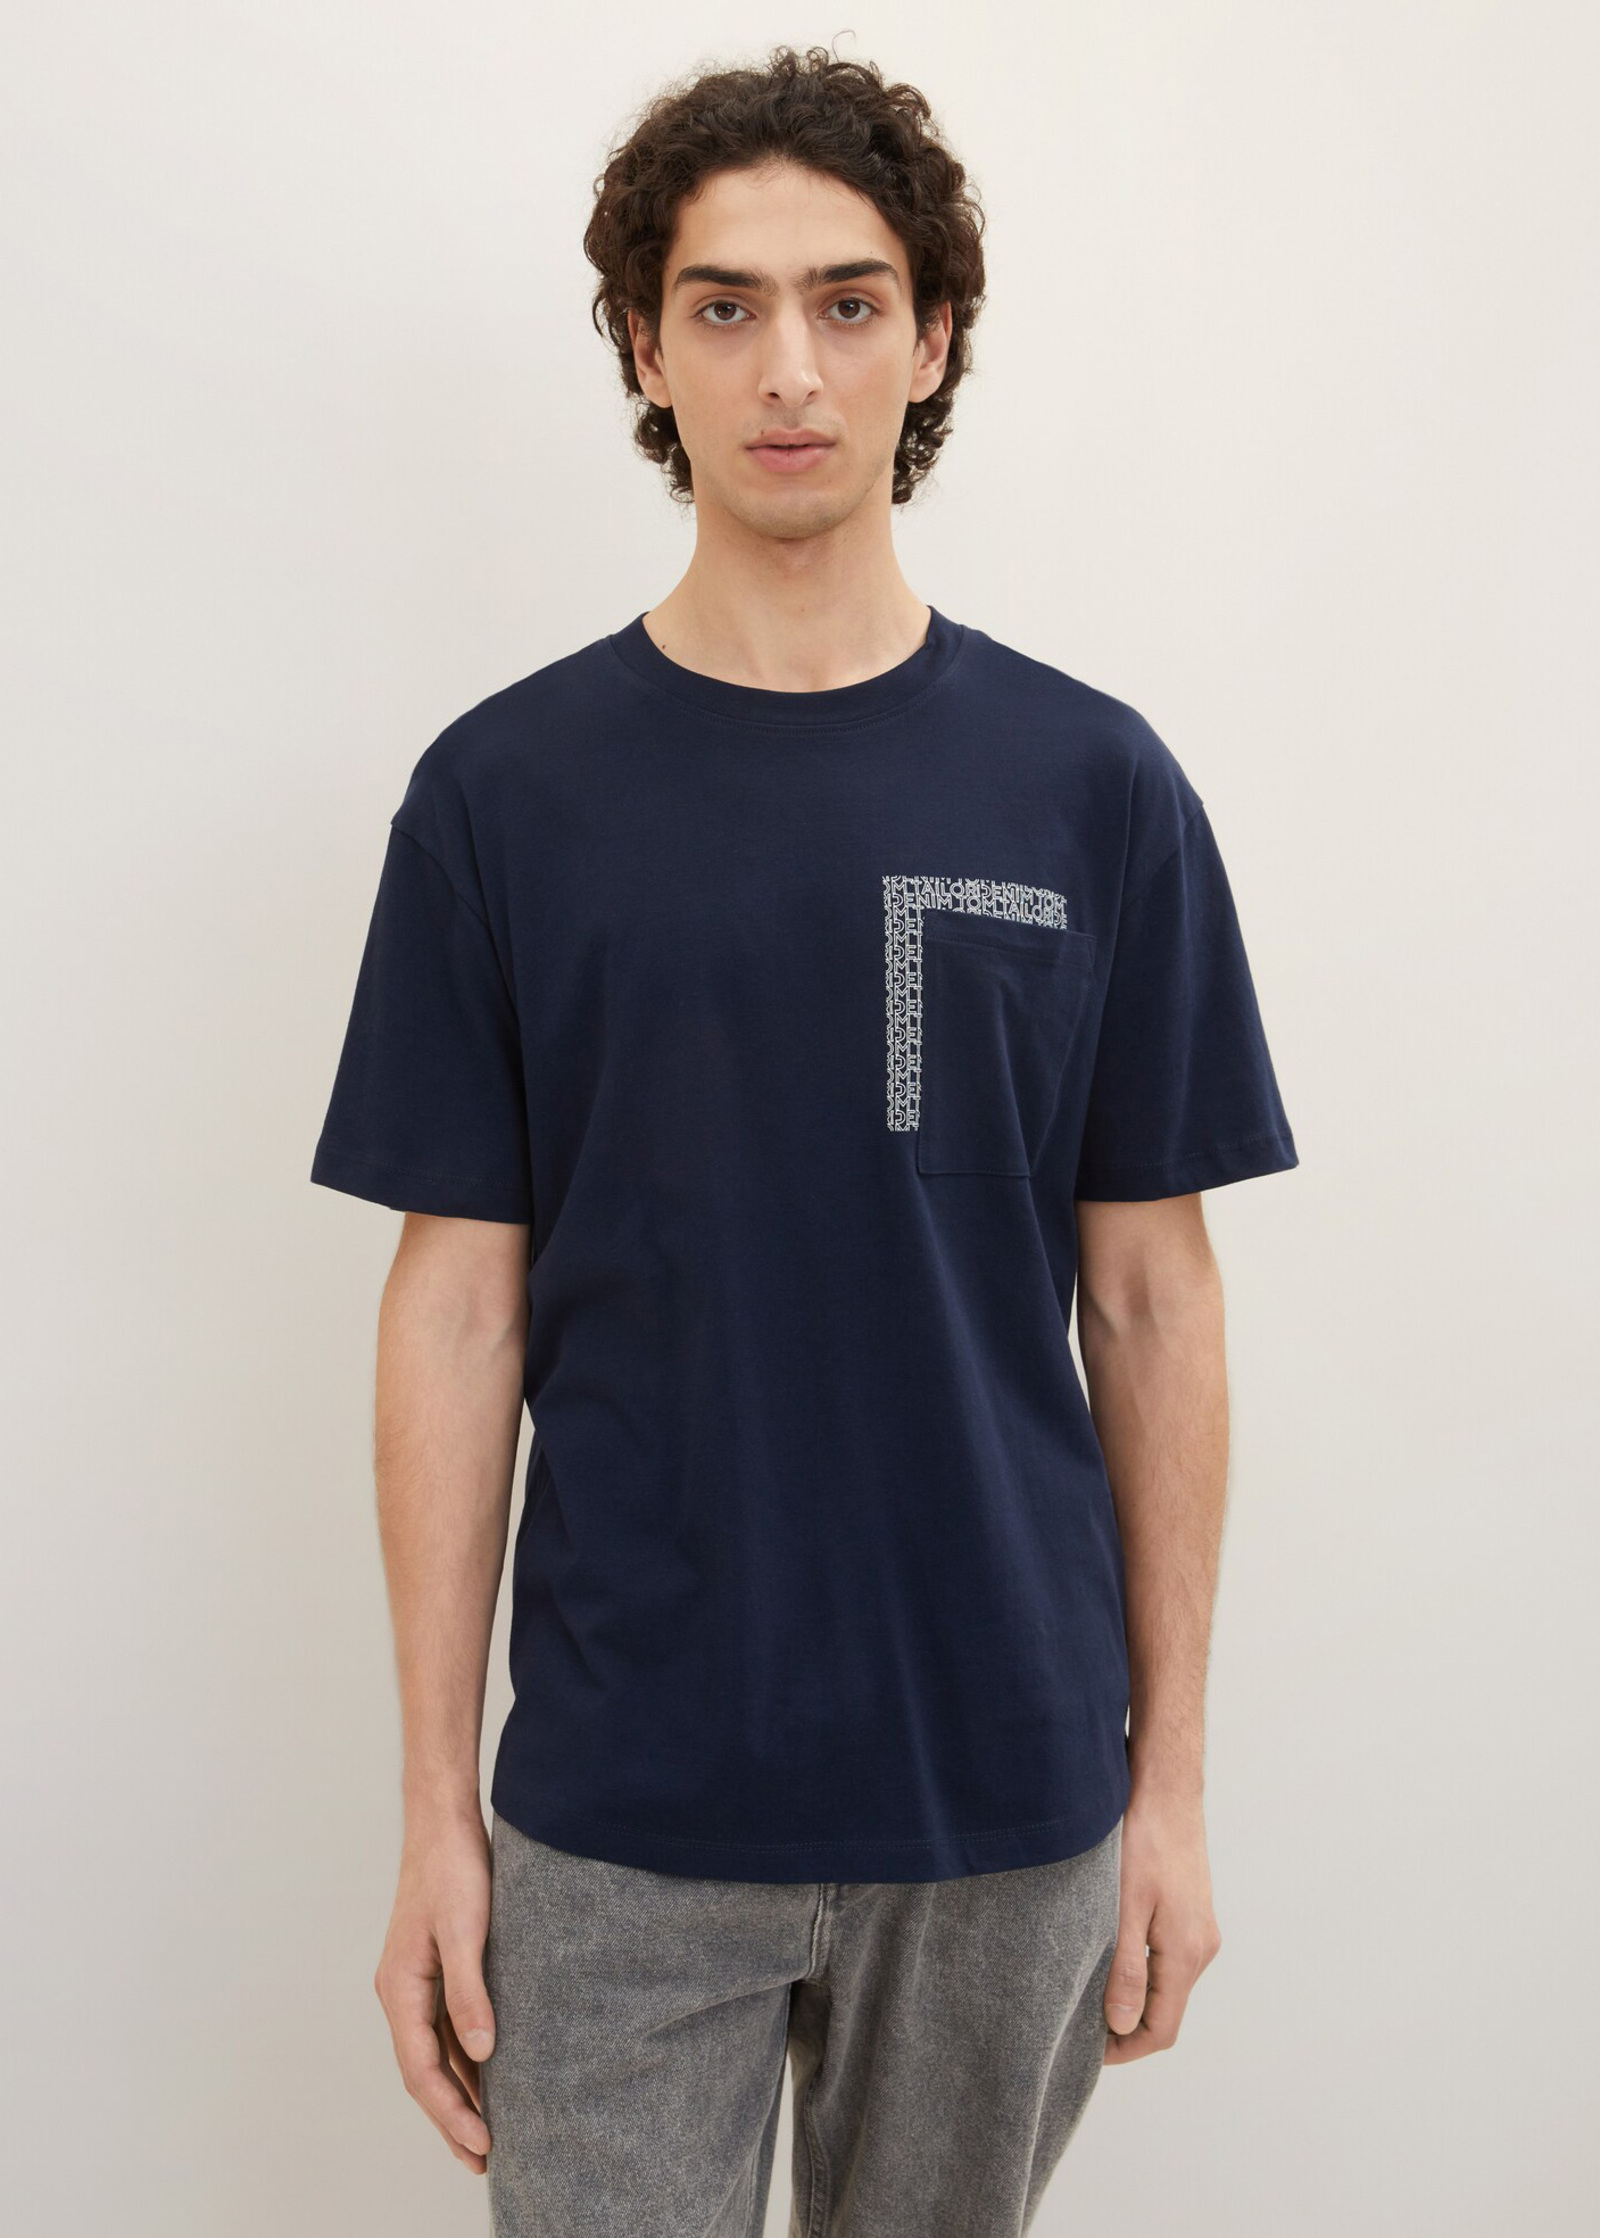 Tom Tailor® T-shirt Sign - XL Size Captain Blue Sky